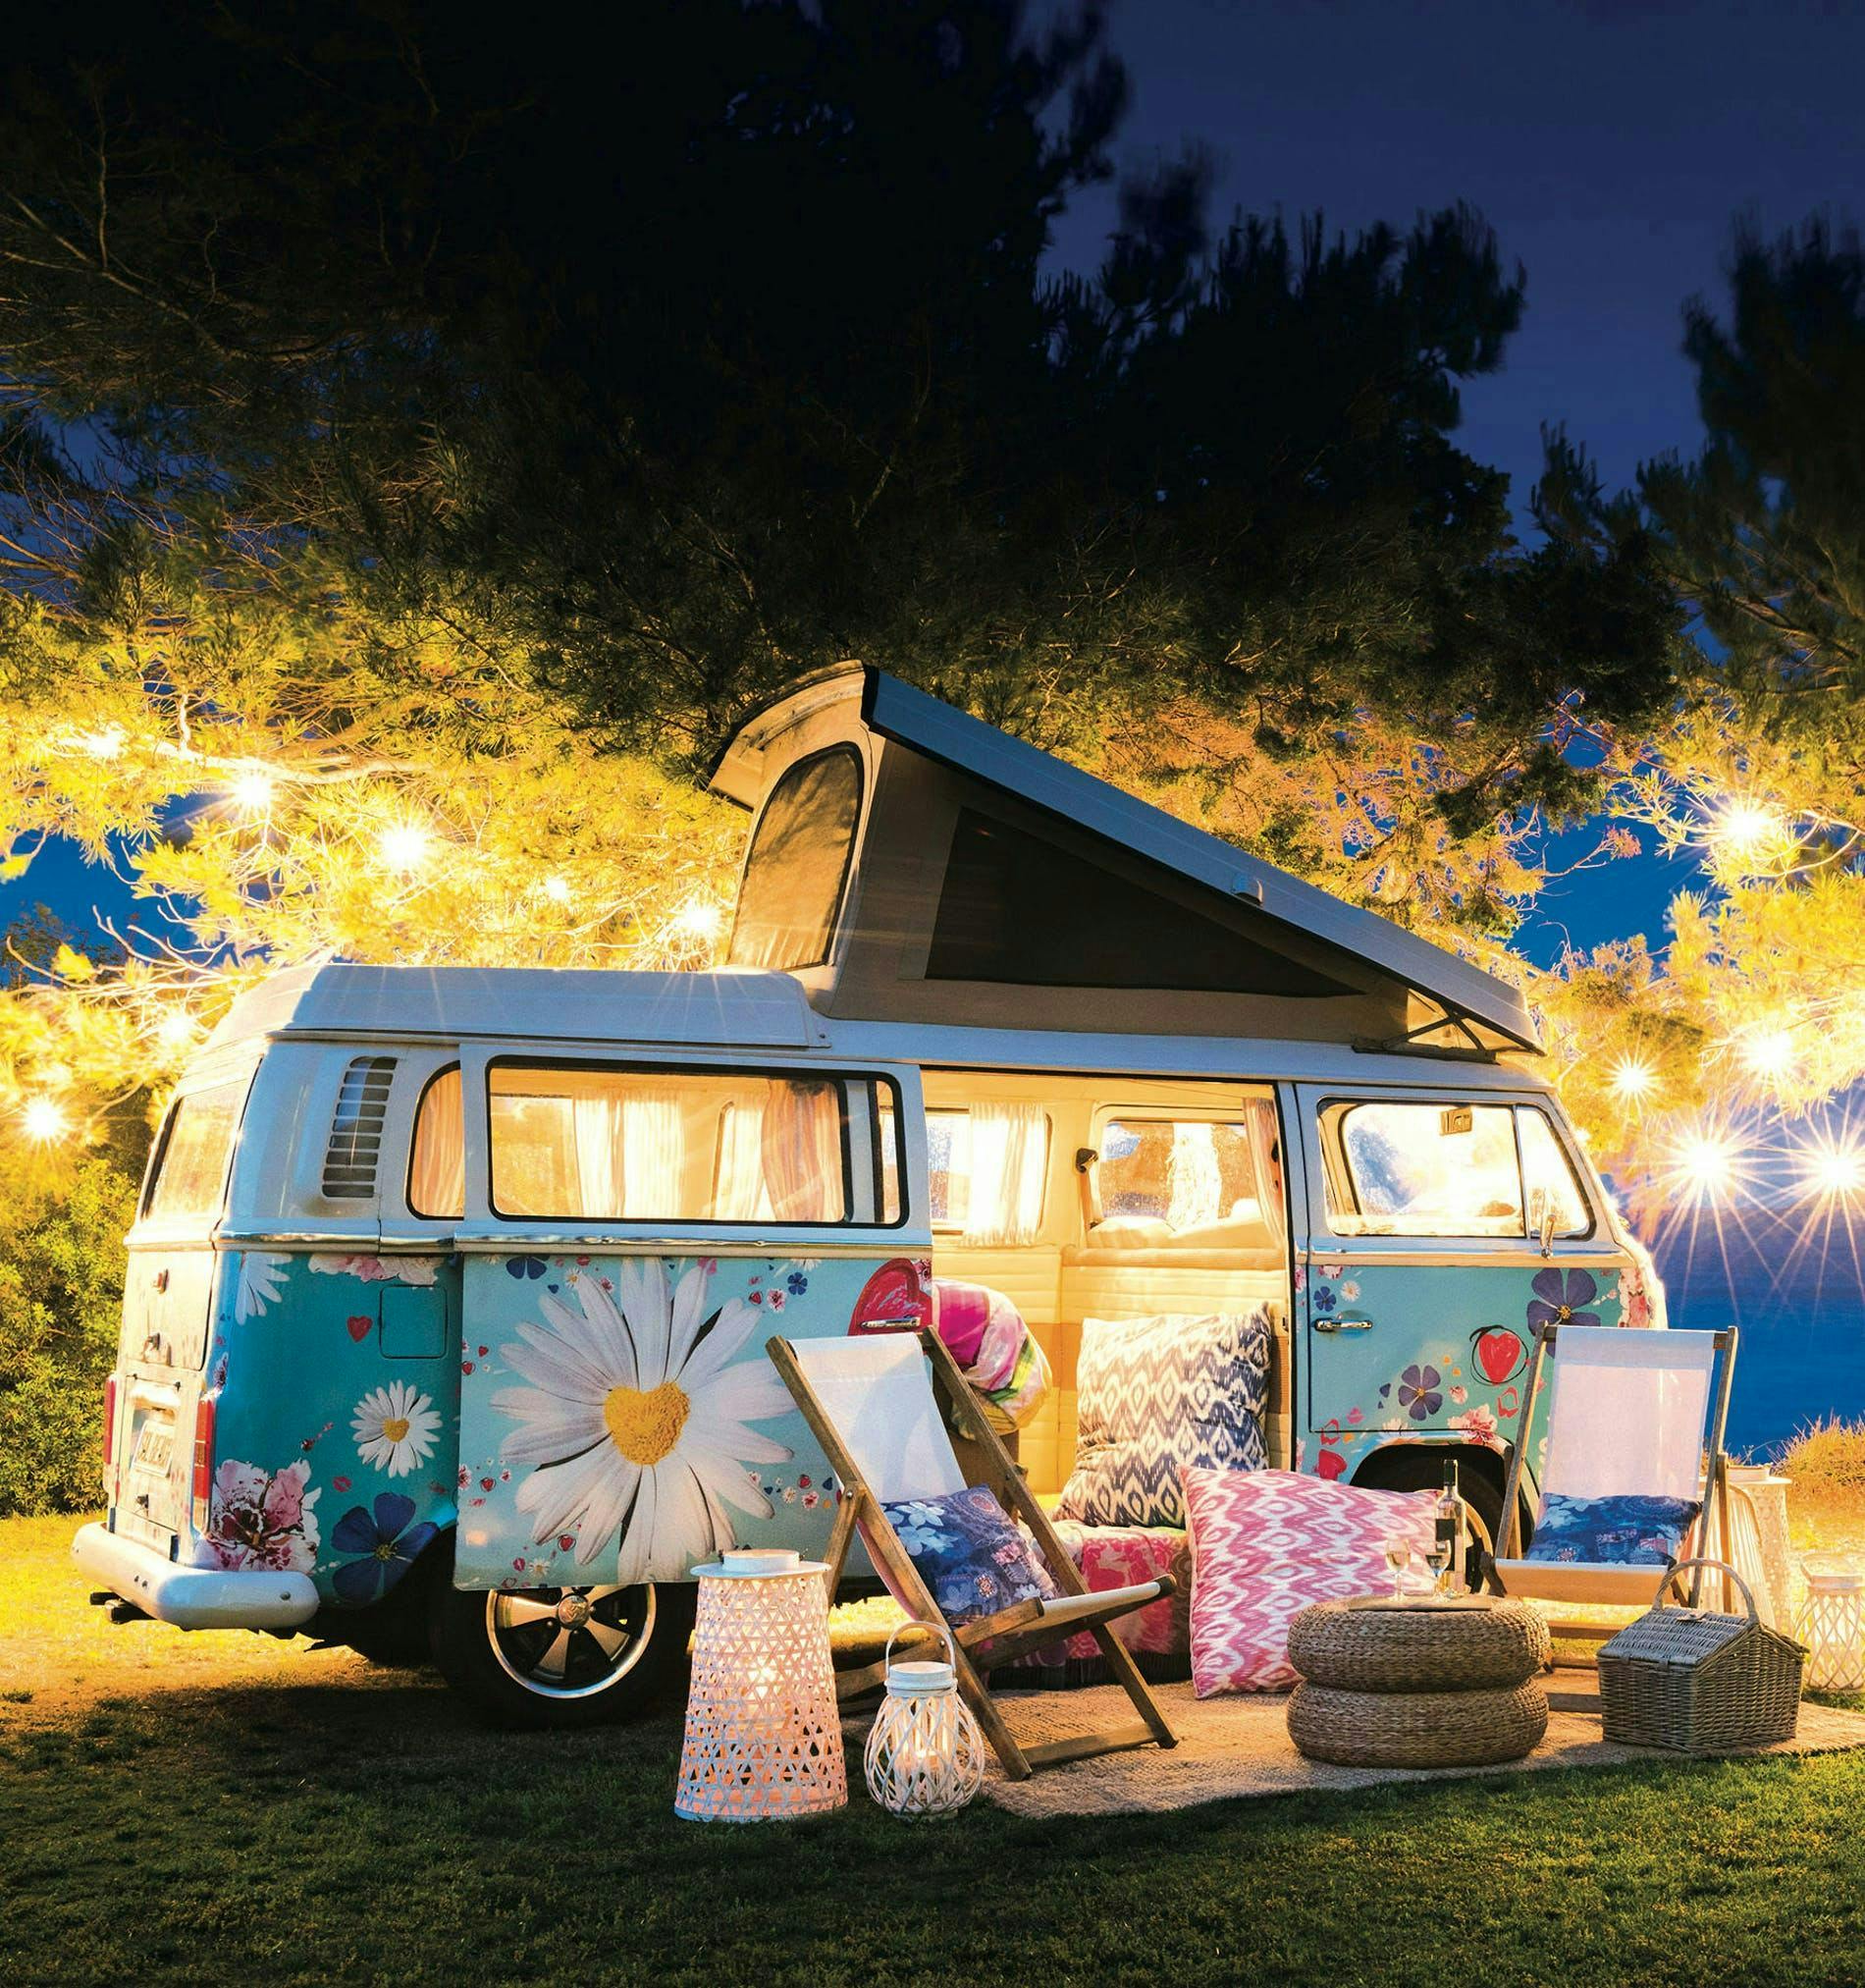 housing building caravan transportation vehicle camping shelter nature outdoors